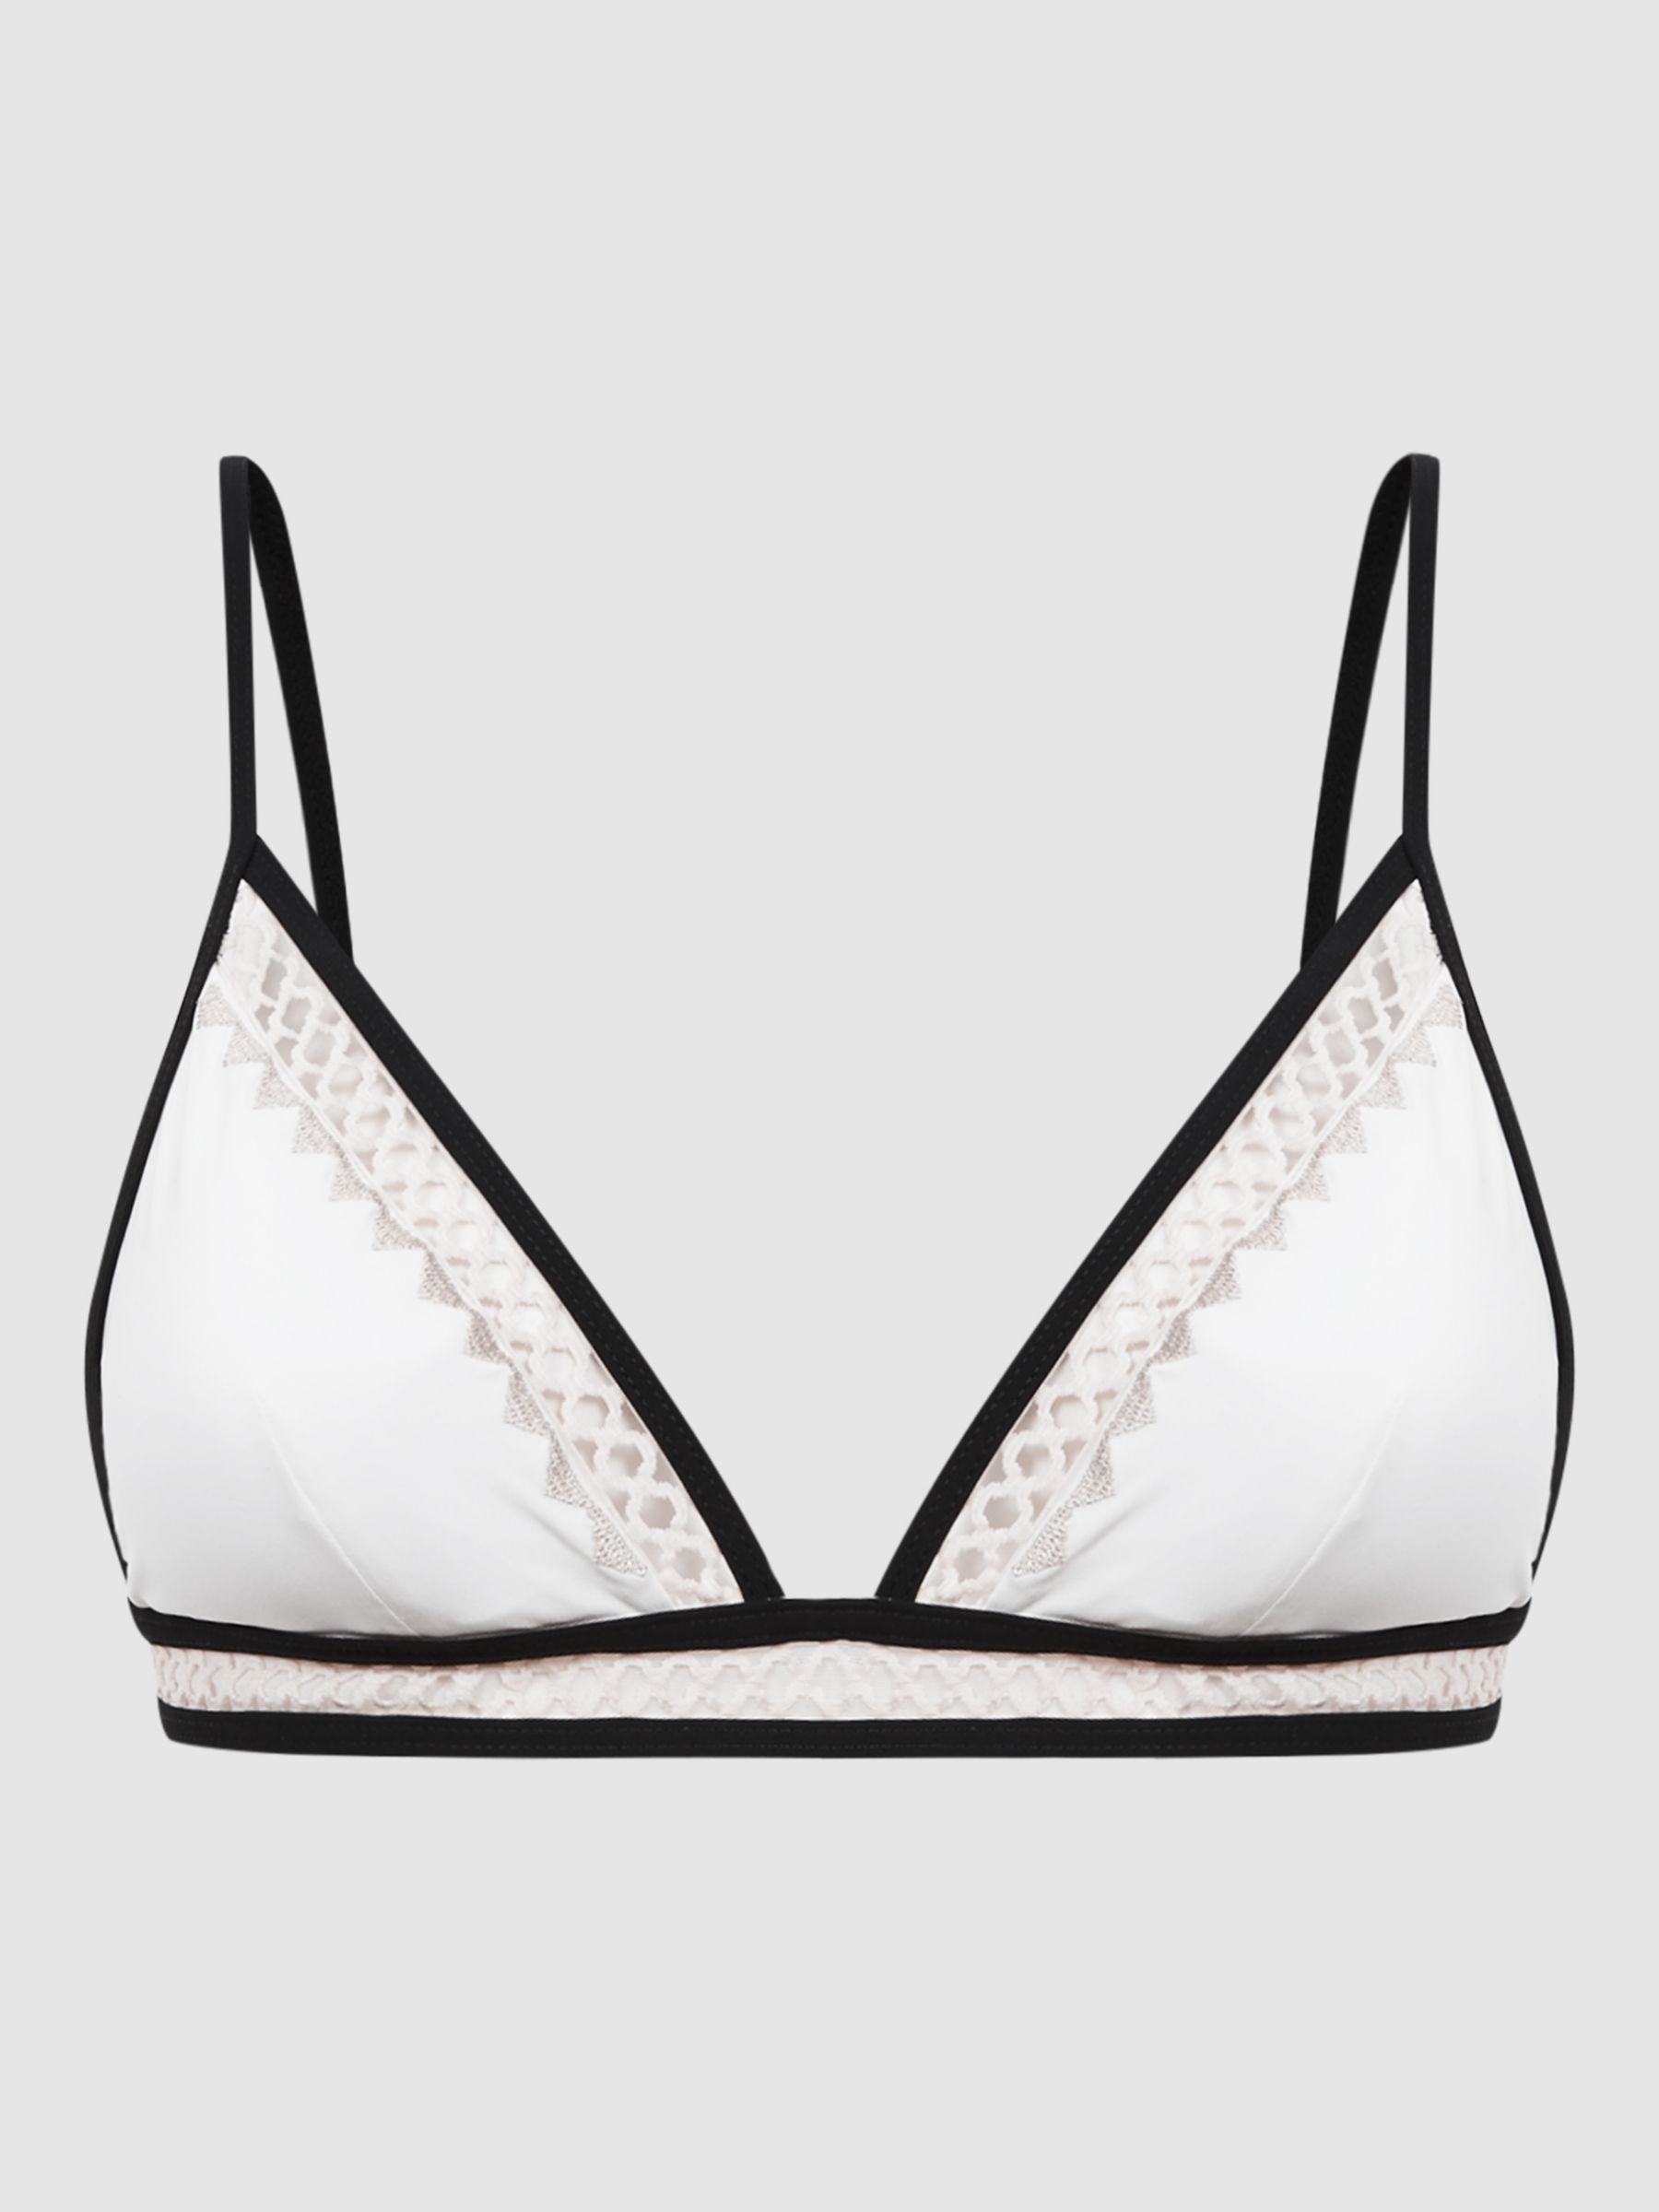 Reiss Sadie Embroidery Triangle Bikini Top, White/Black, 6